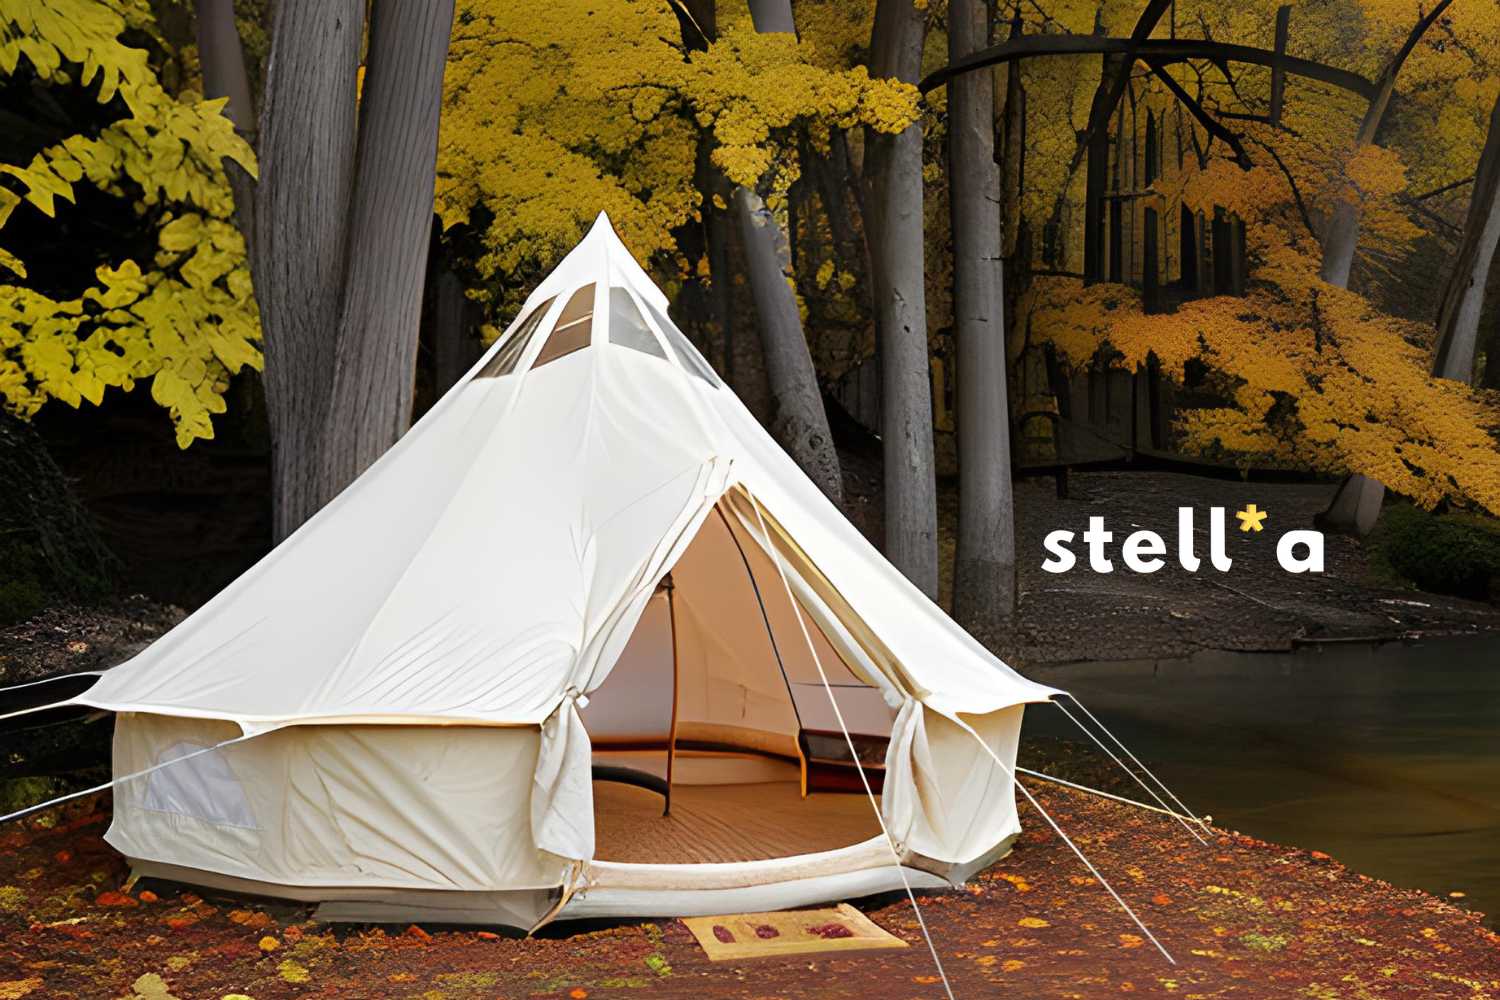 stargazer tent near a river in the fall